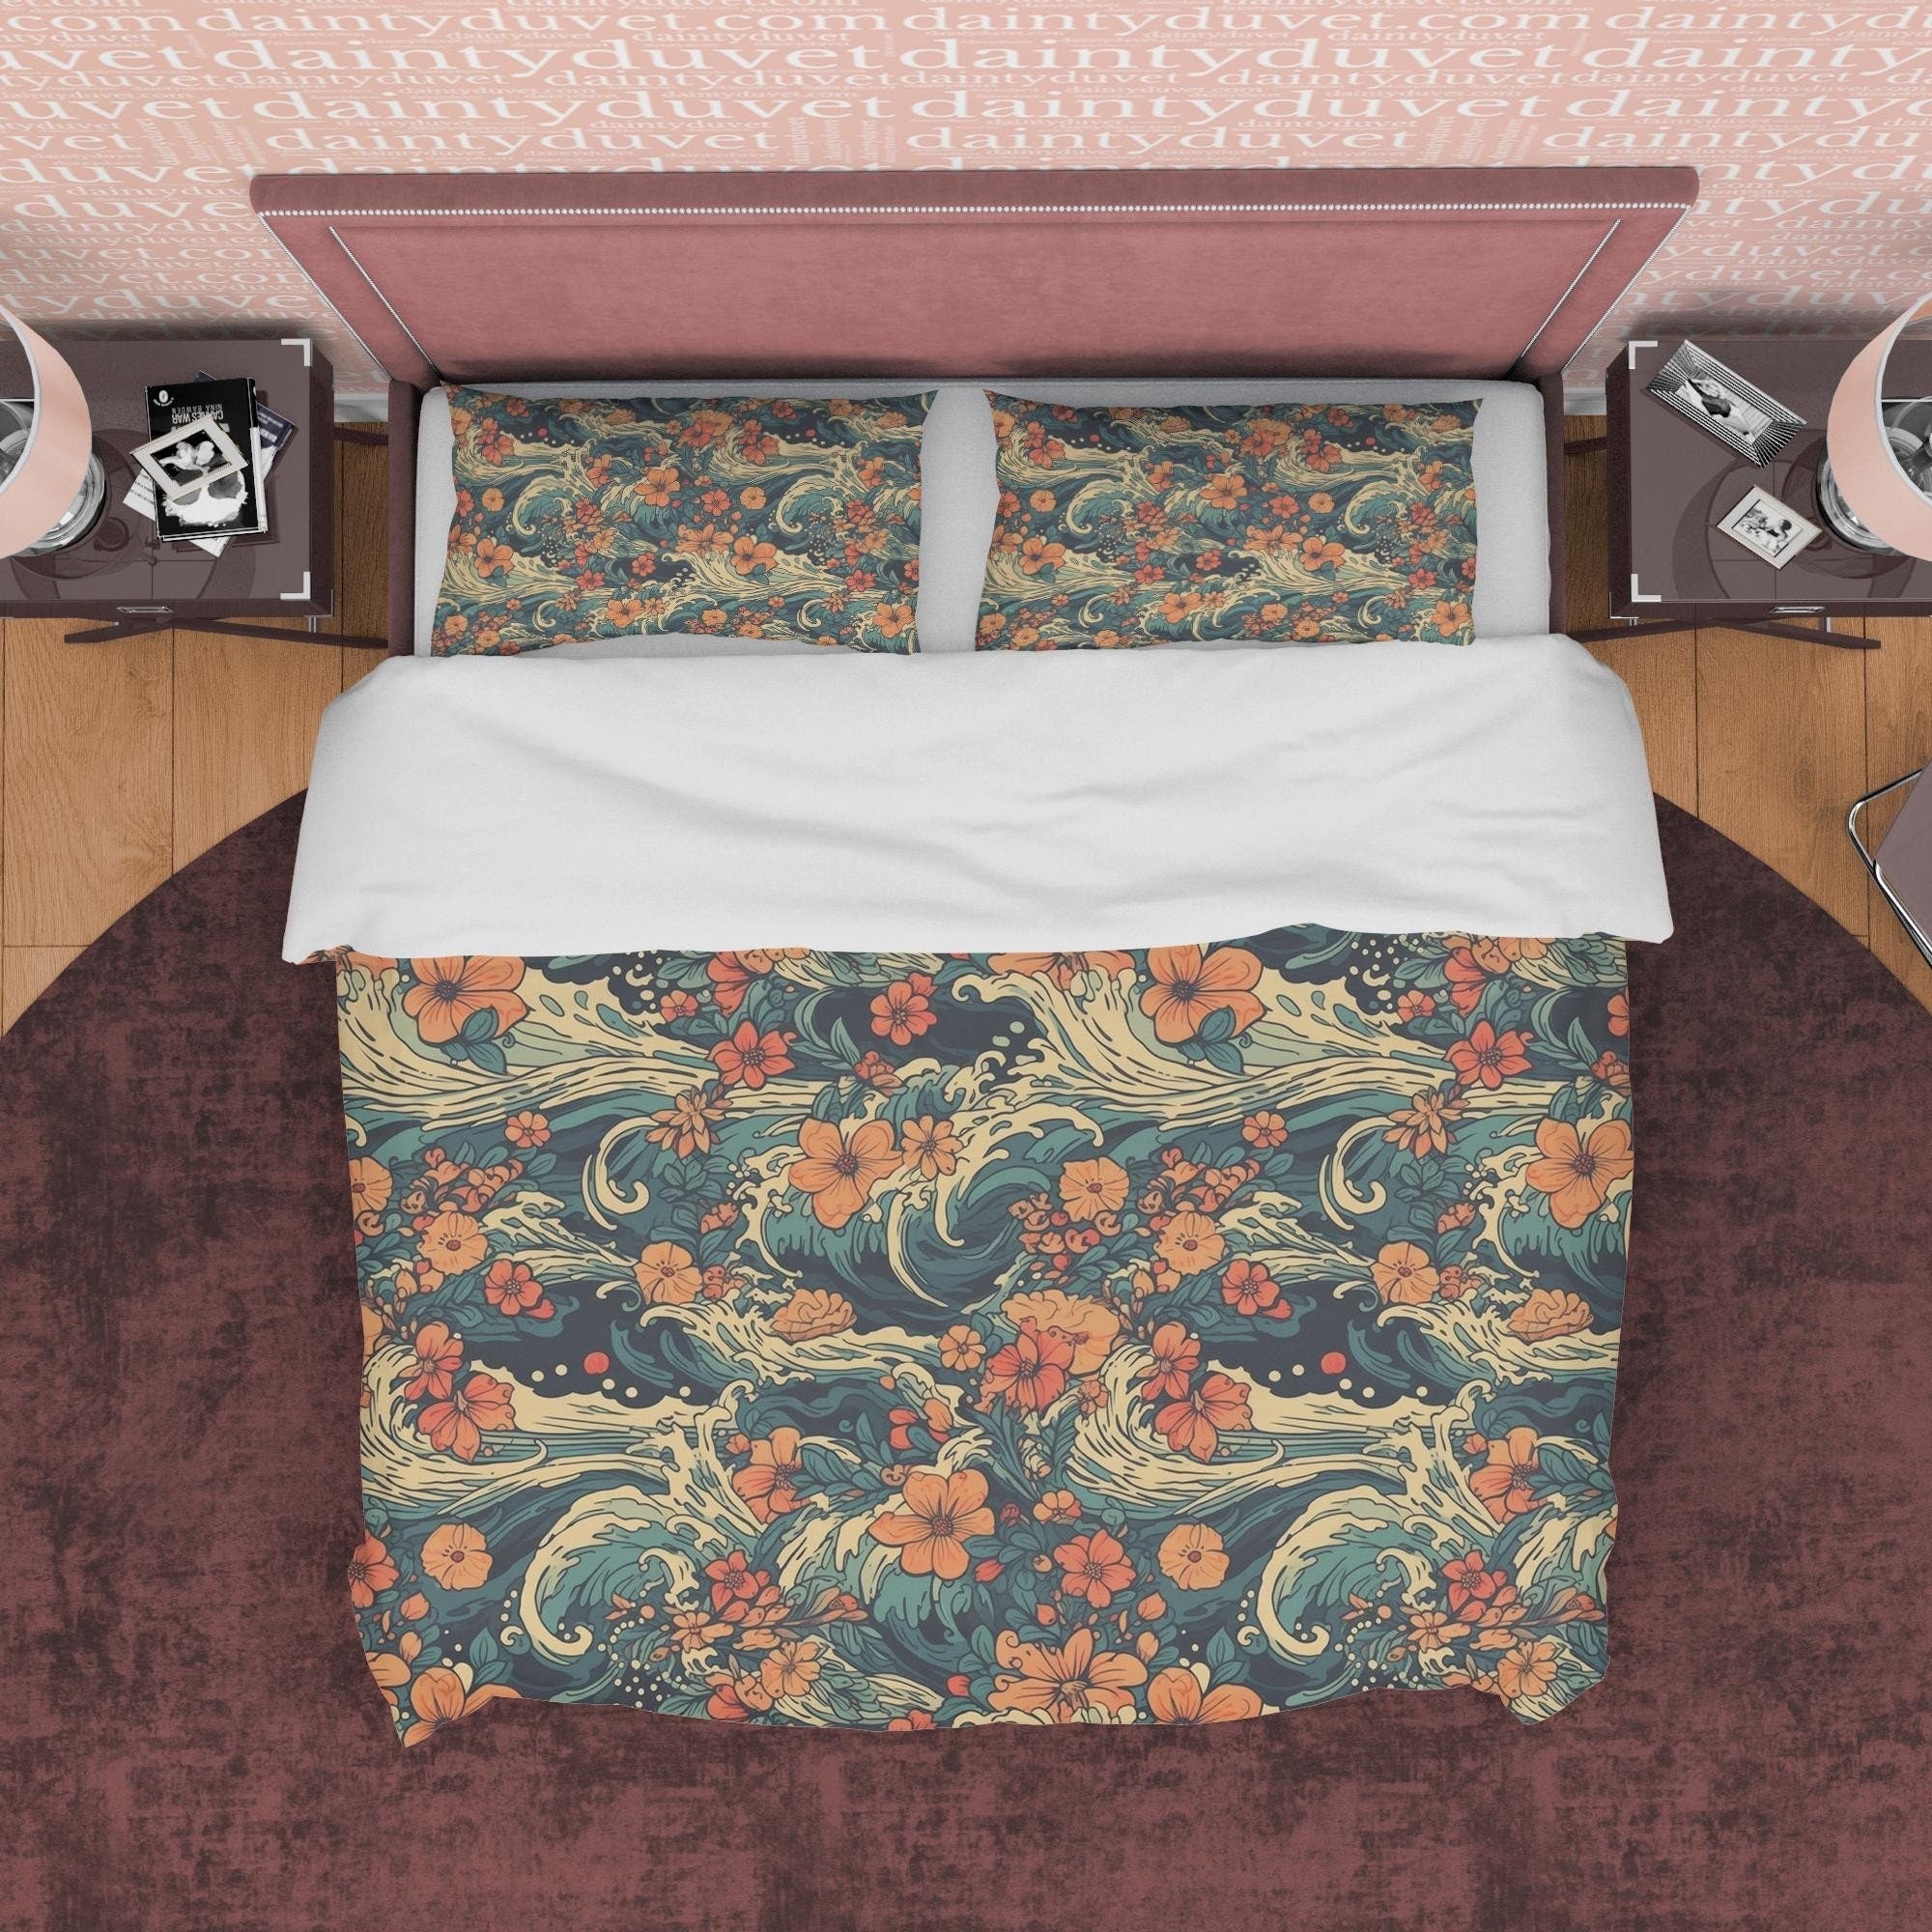 Ocean Waves Retro Cotton Duvet Cover, Floral Abstract Quilt Cover, 70s Nostalgia Bedding Set, Unique Blanket Cover, Vintage Bedroom Decor